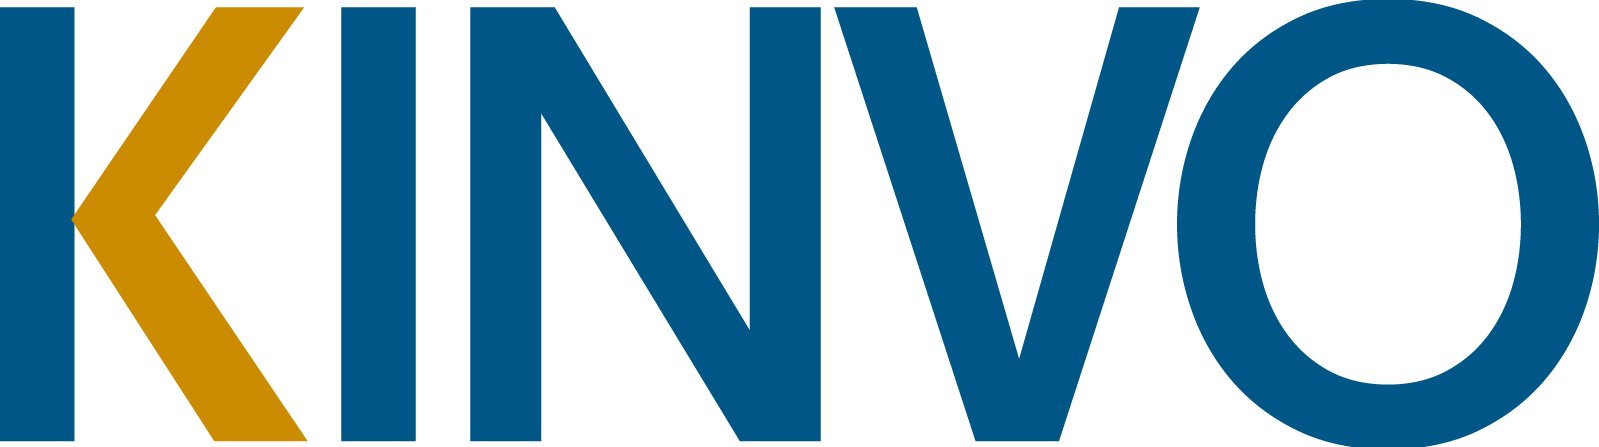 Trademark Logo KINVO